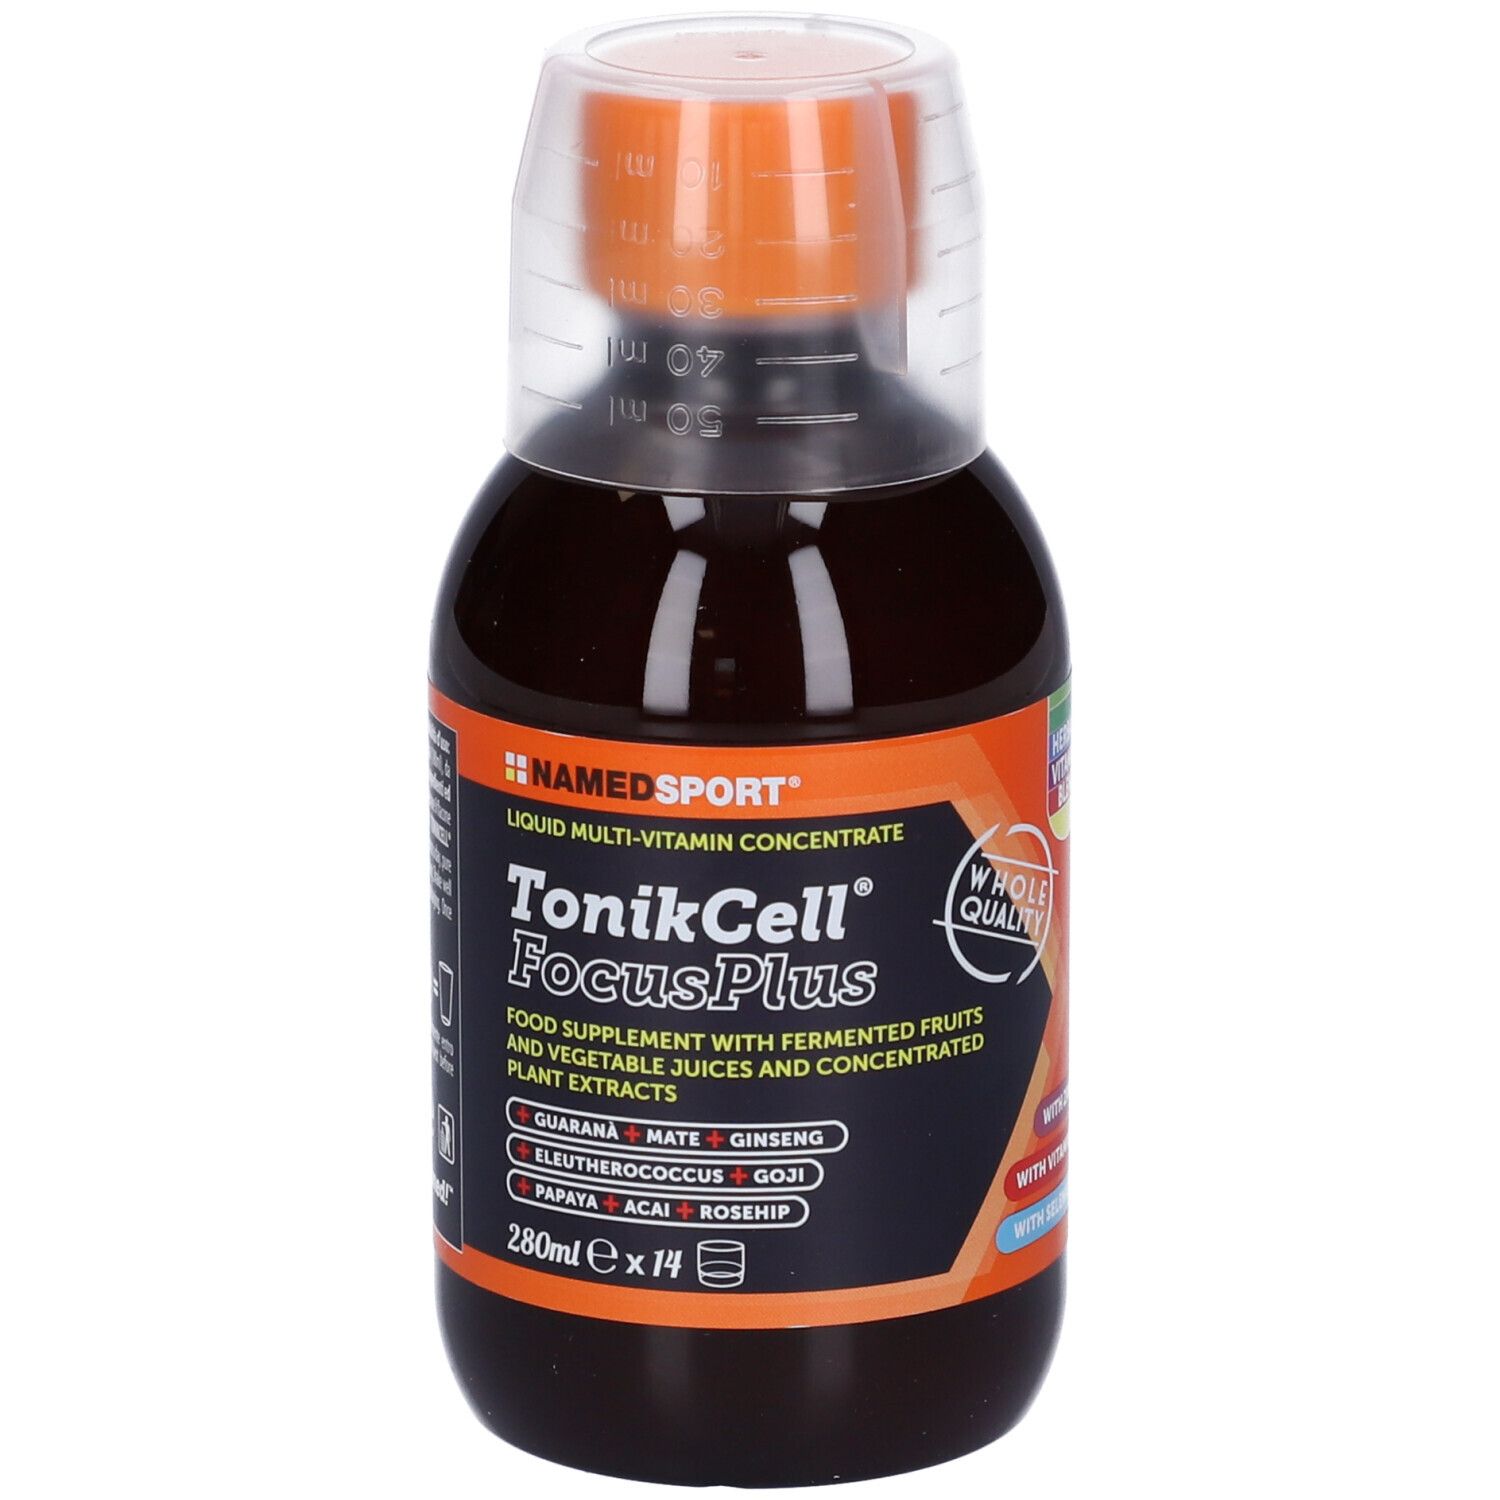 NAMED SPORT® TonikCell FocusPlus